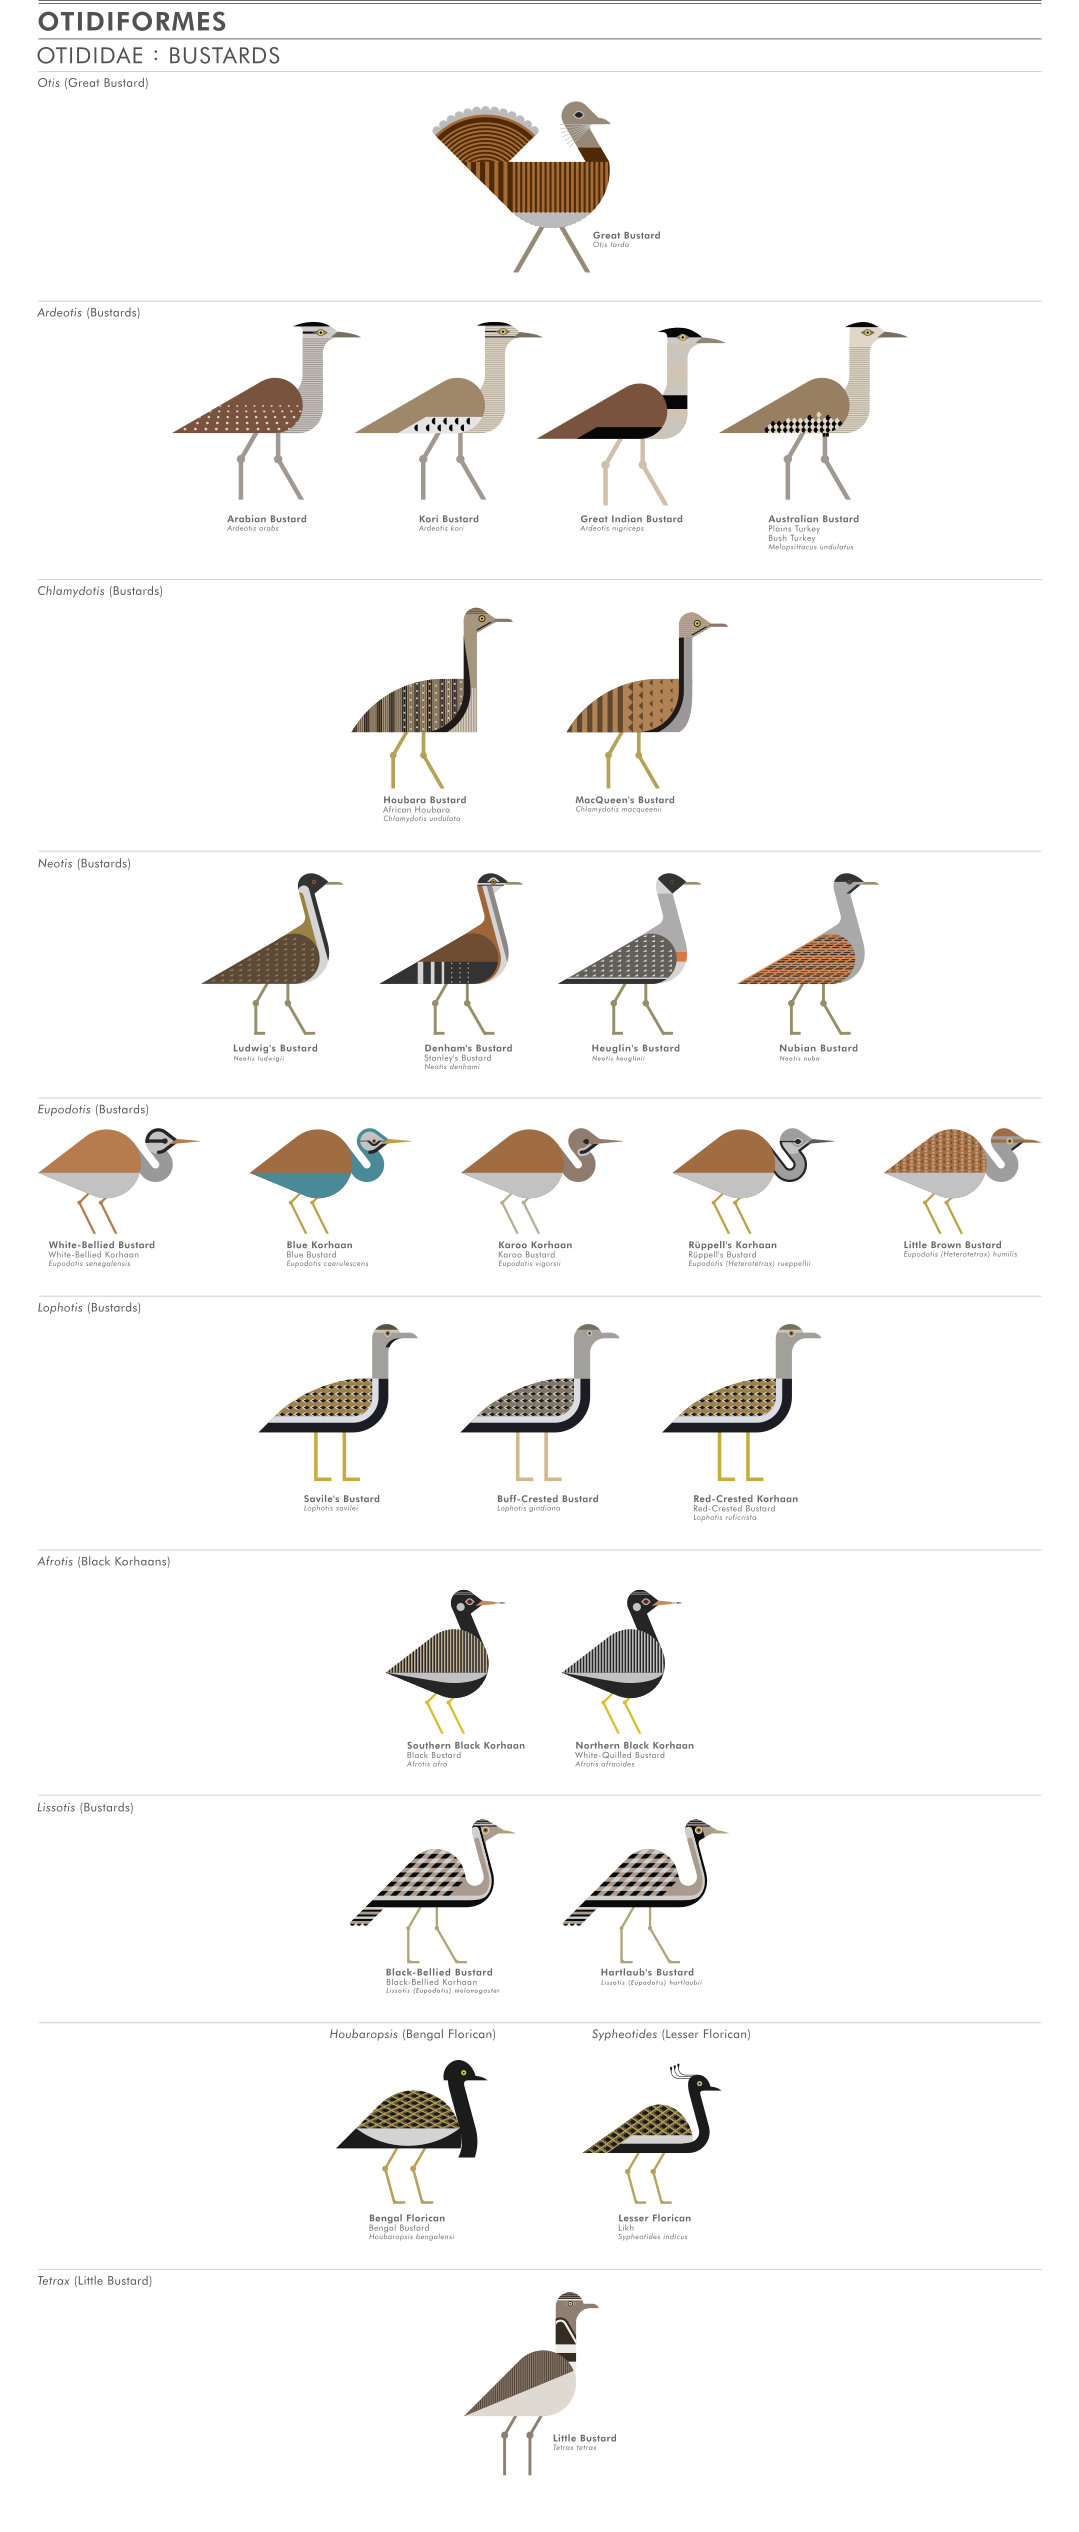 scott partridge - ave - avian vector encyclopedia - bustards - vector bird art